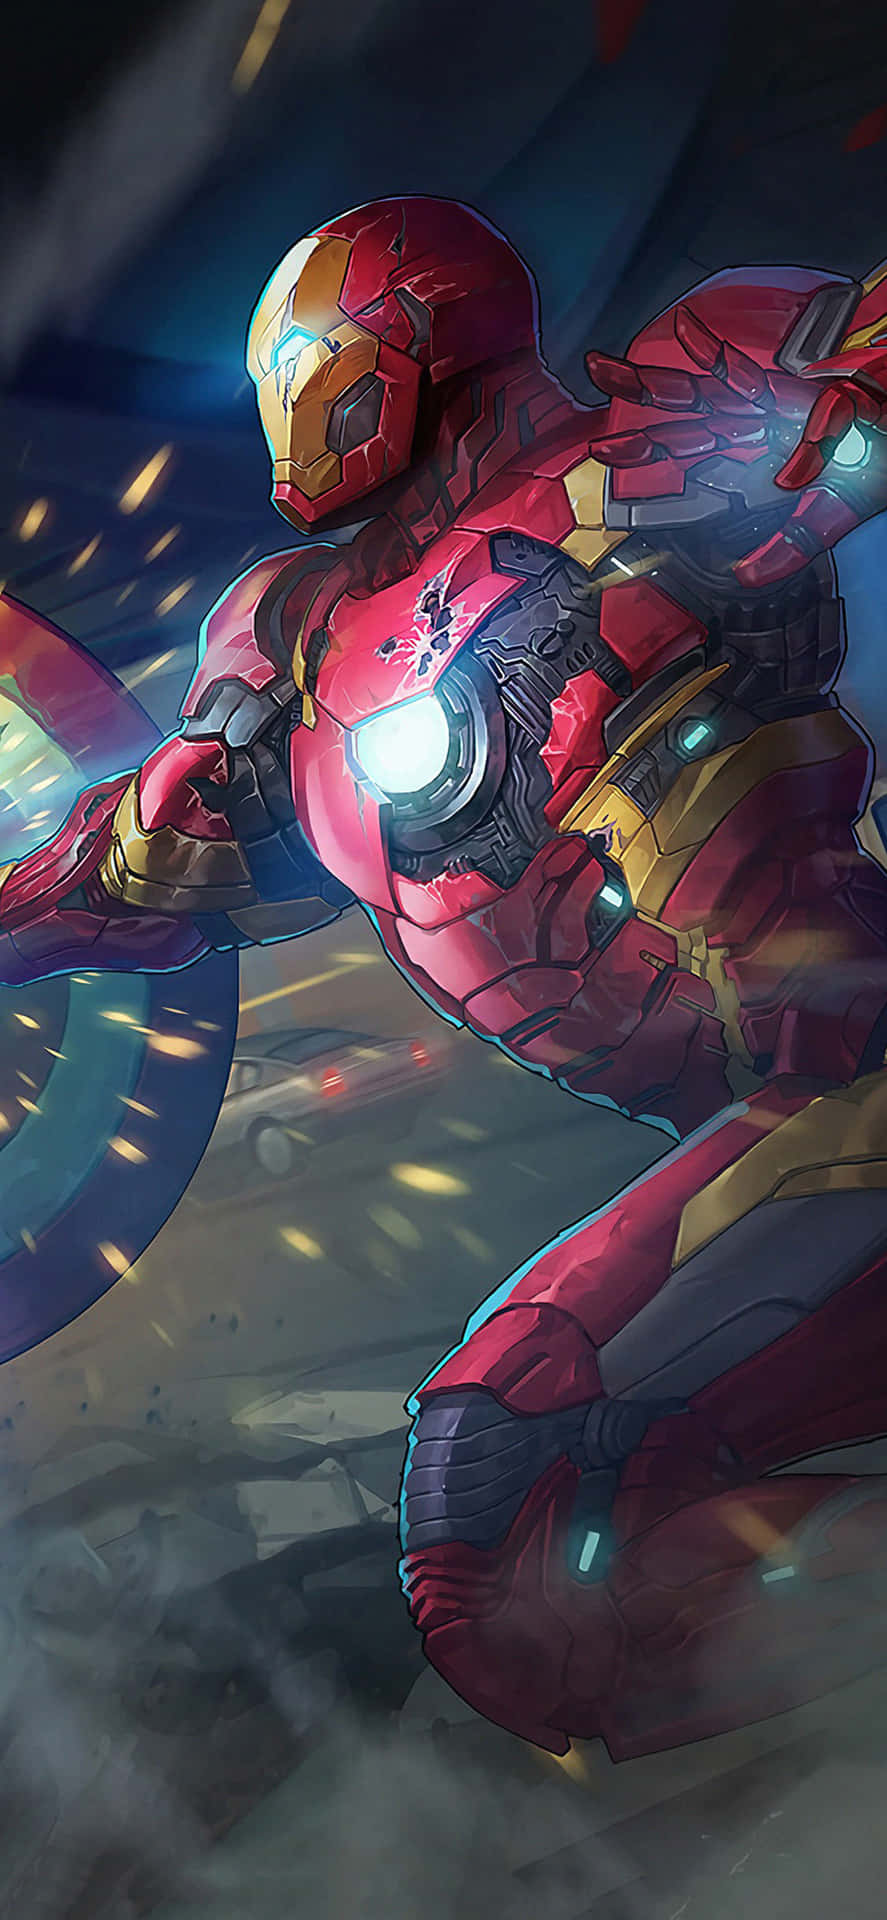 Iphonex Iron Man Bakgrund Fanart Teckning Skadad Dräkt.